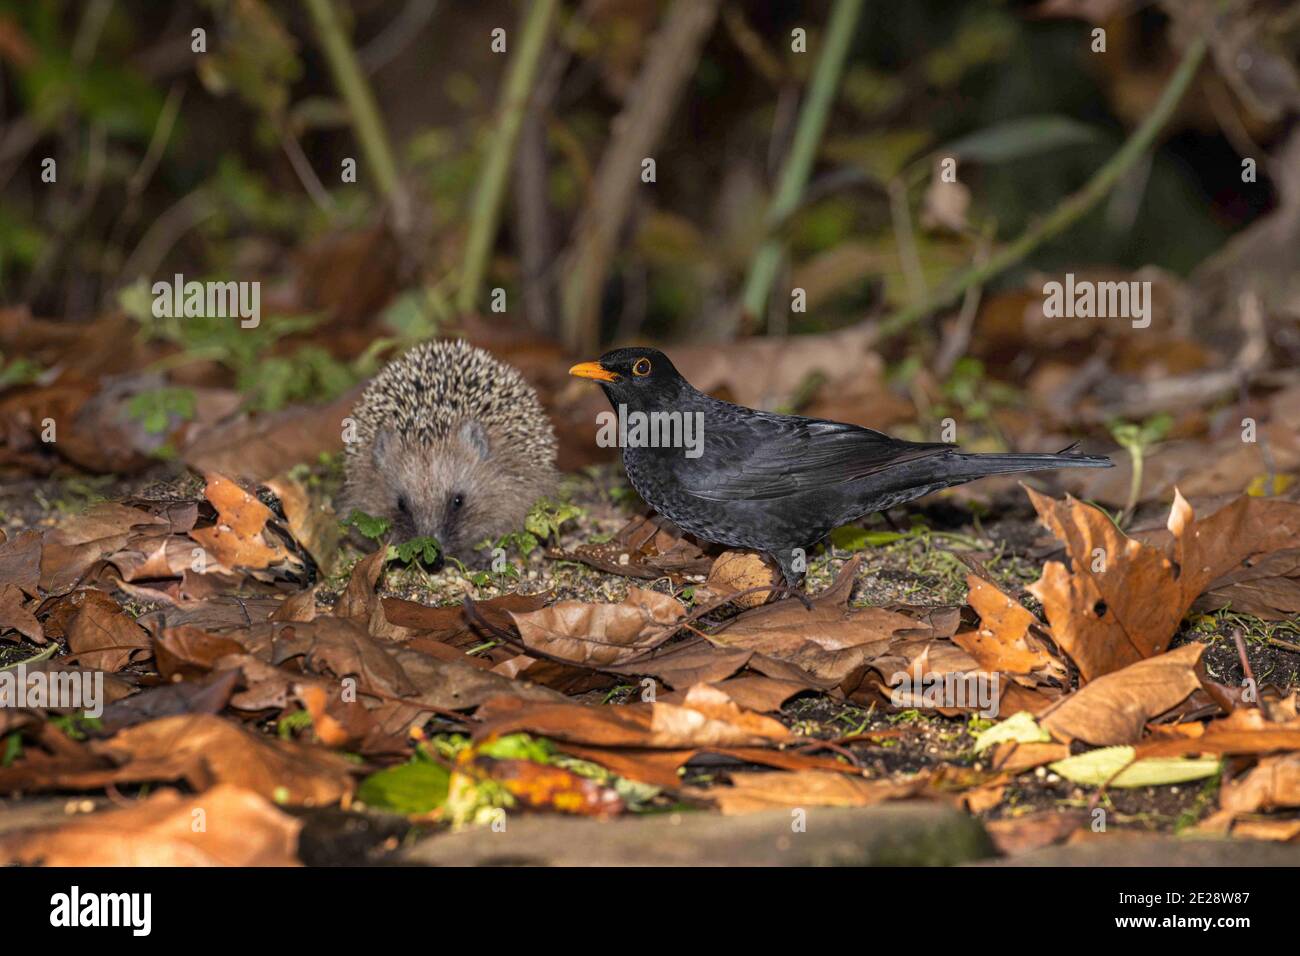 Western hedgehog, European hedgehog (Erinaceus europaeus), together with a male blackbird in autumn foliage, Germany, Bavaria Stock Photo